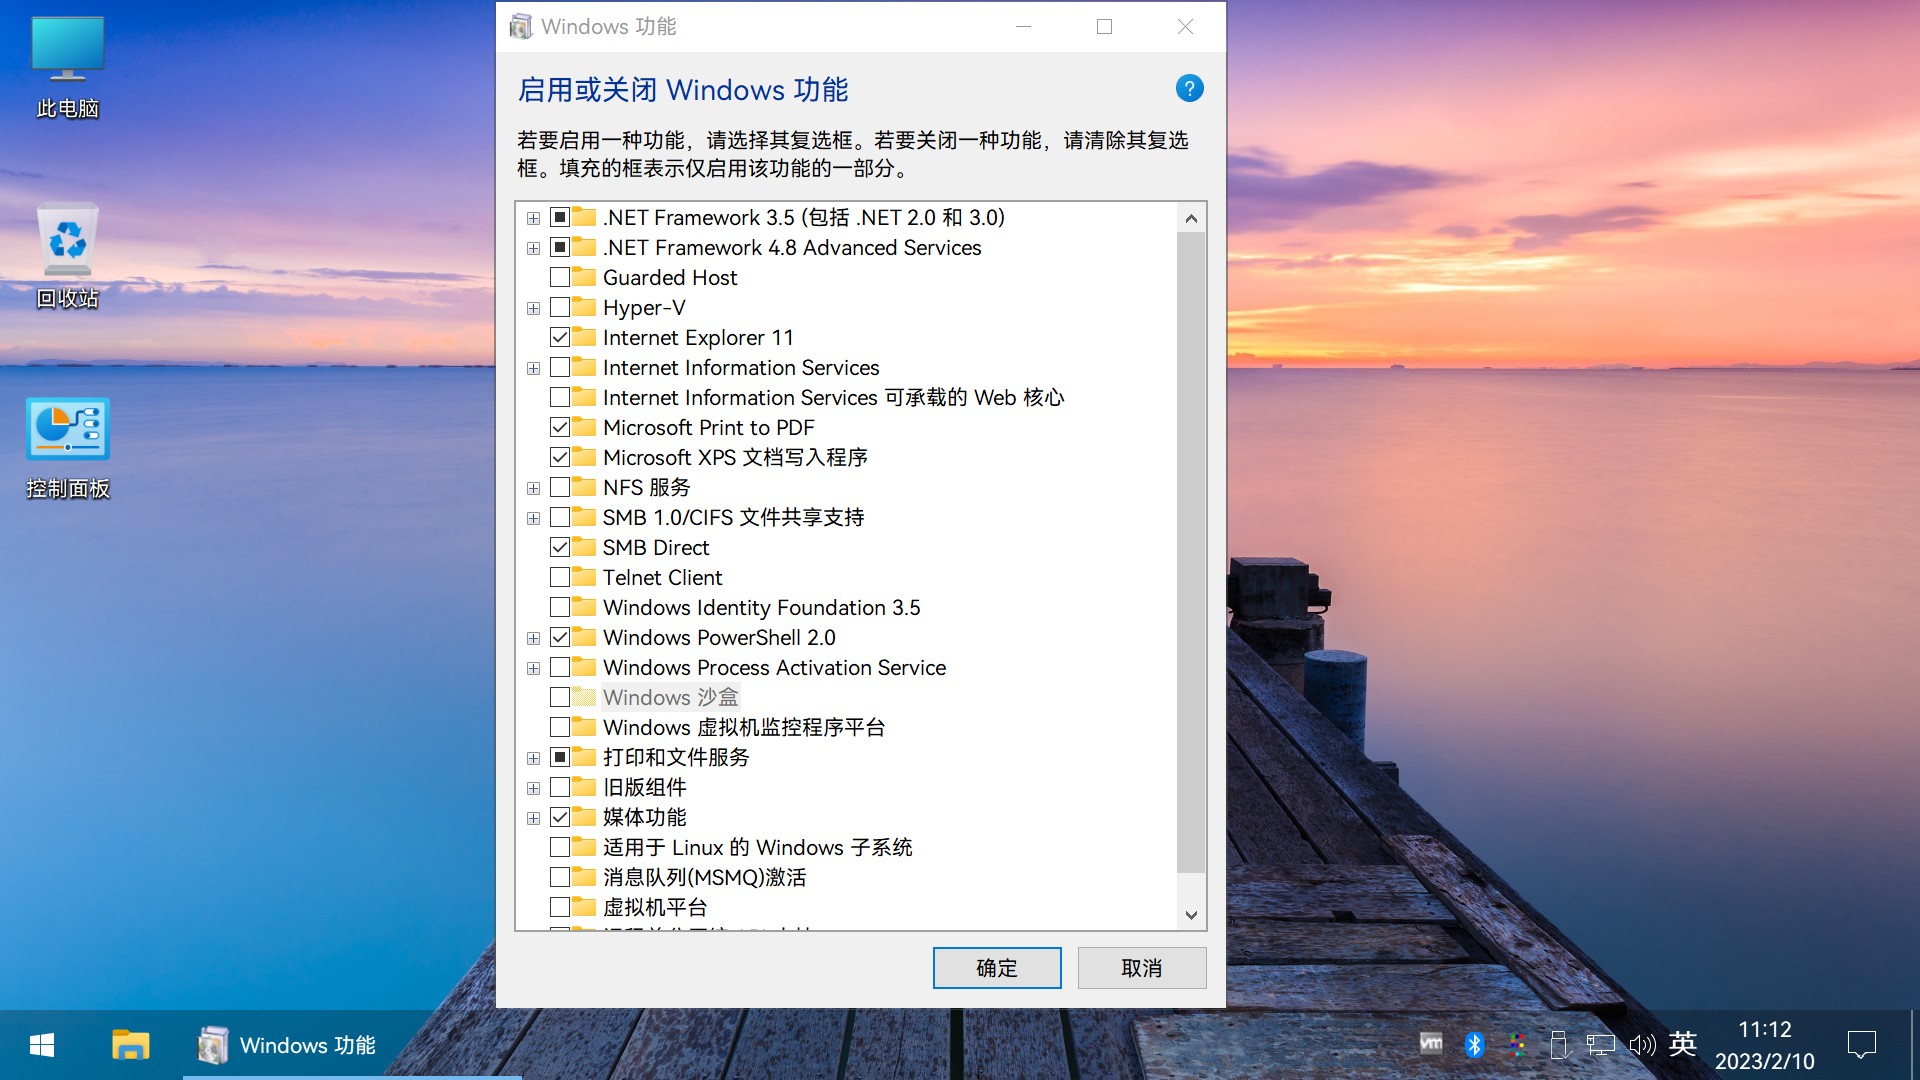 <b>【不忘初心】 Windows10 1909 (18363.2274) X64 [美化版精简版] 鸿蒙HarmonyOS</b>